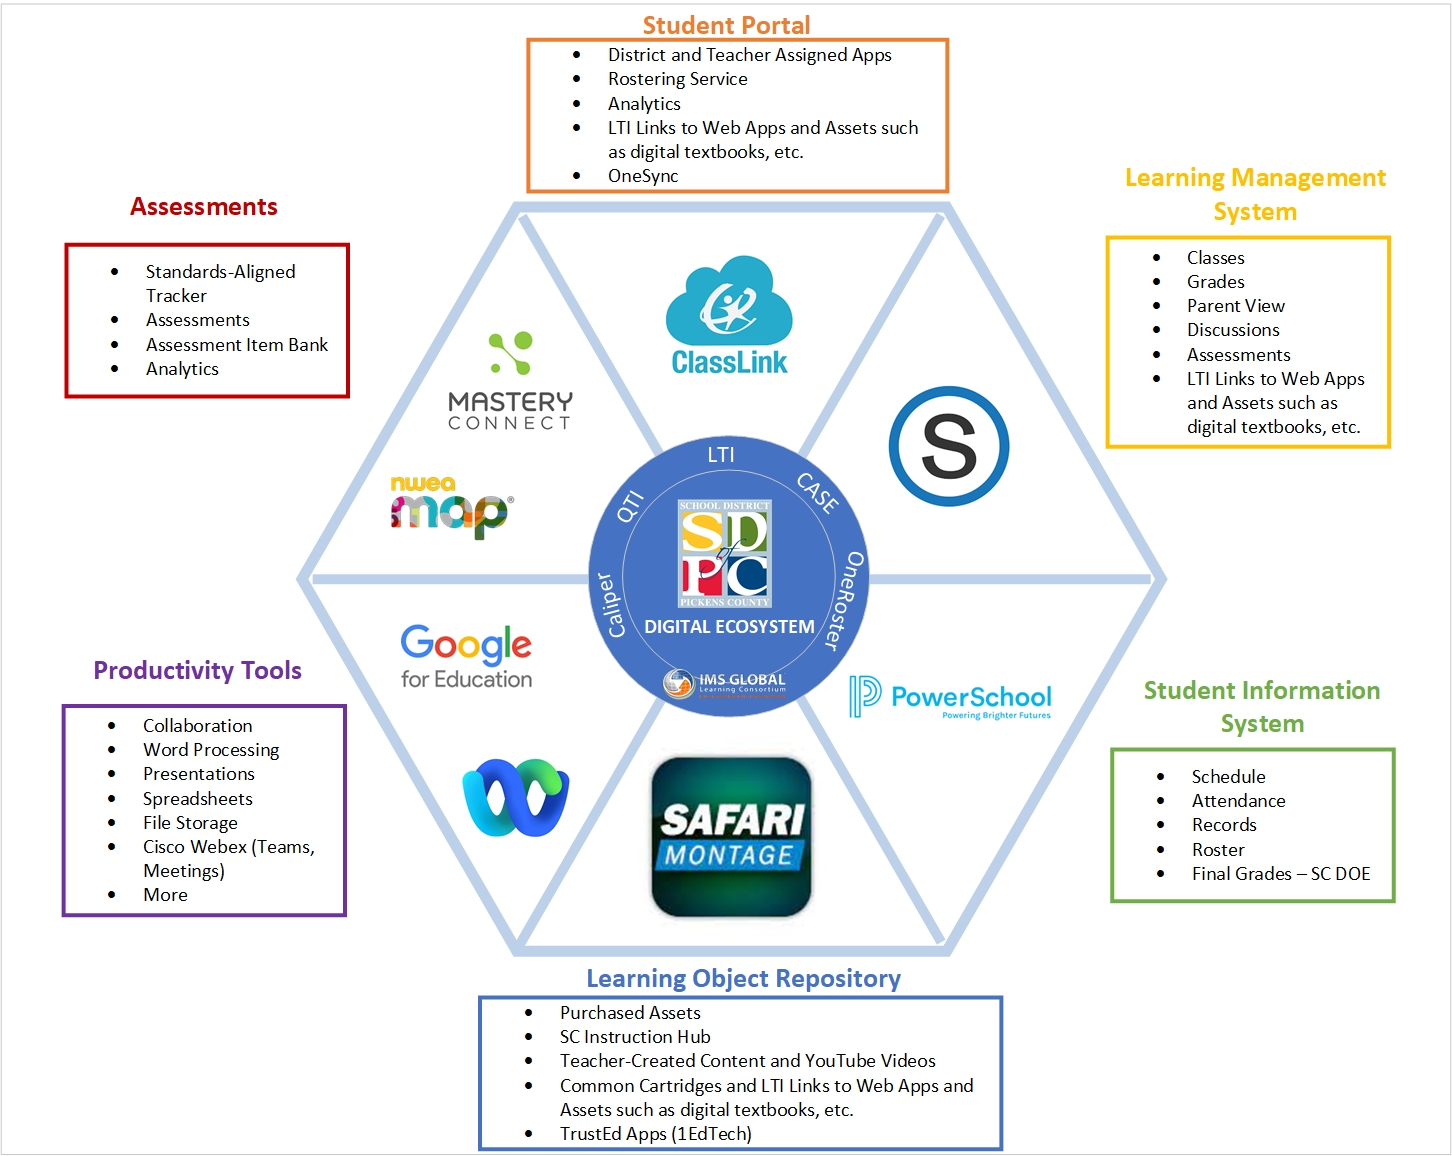 SDPC Digital Ecosystem